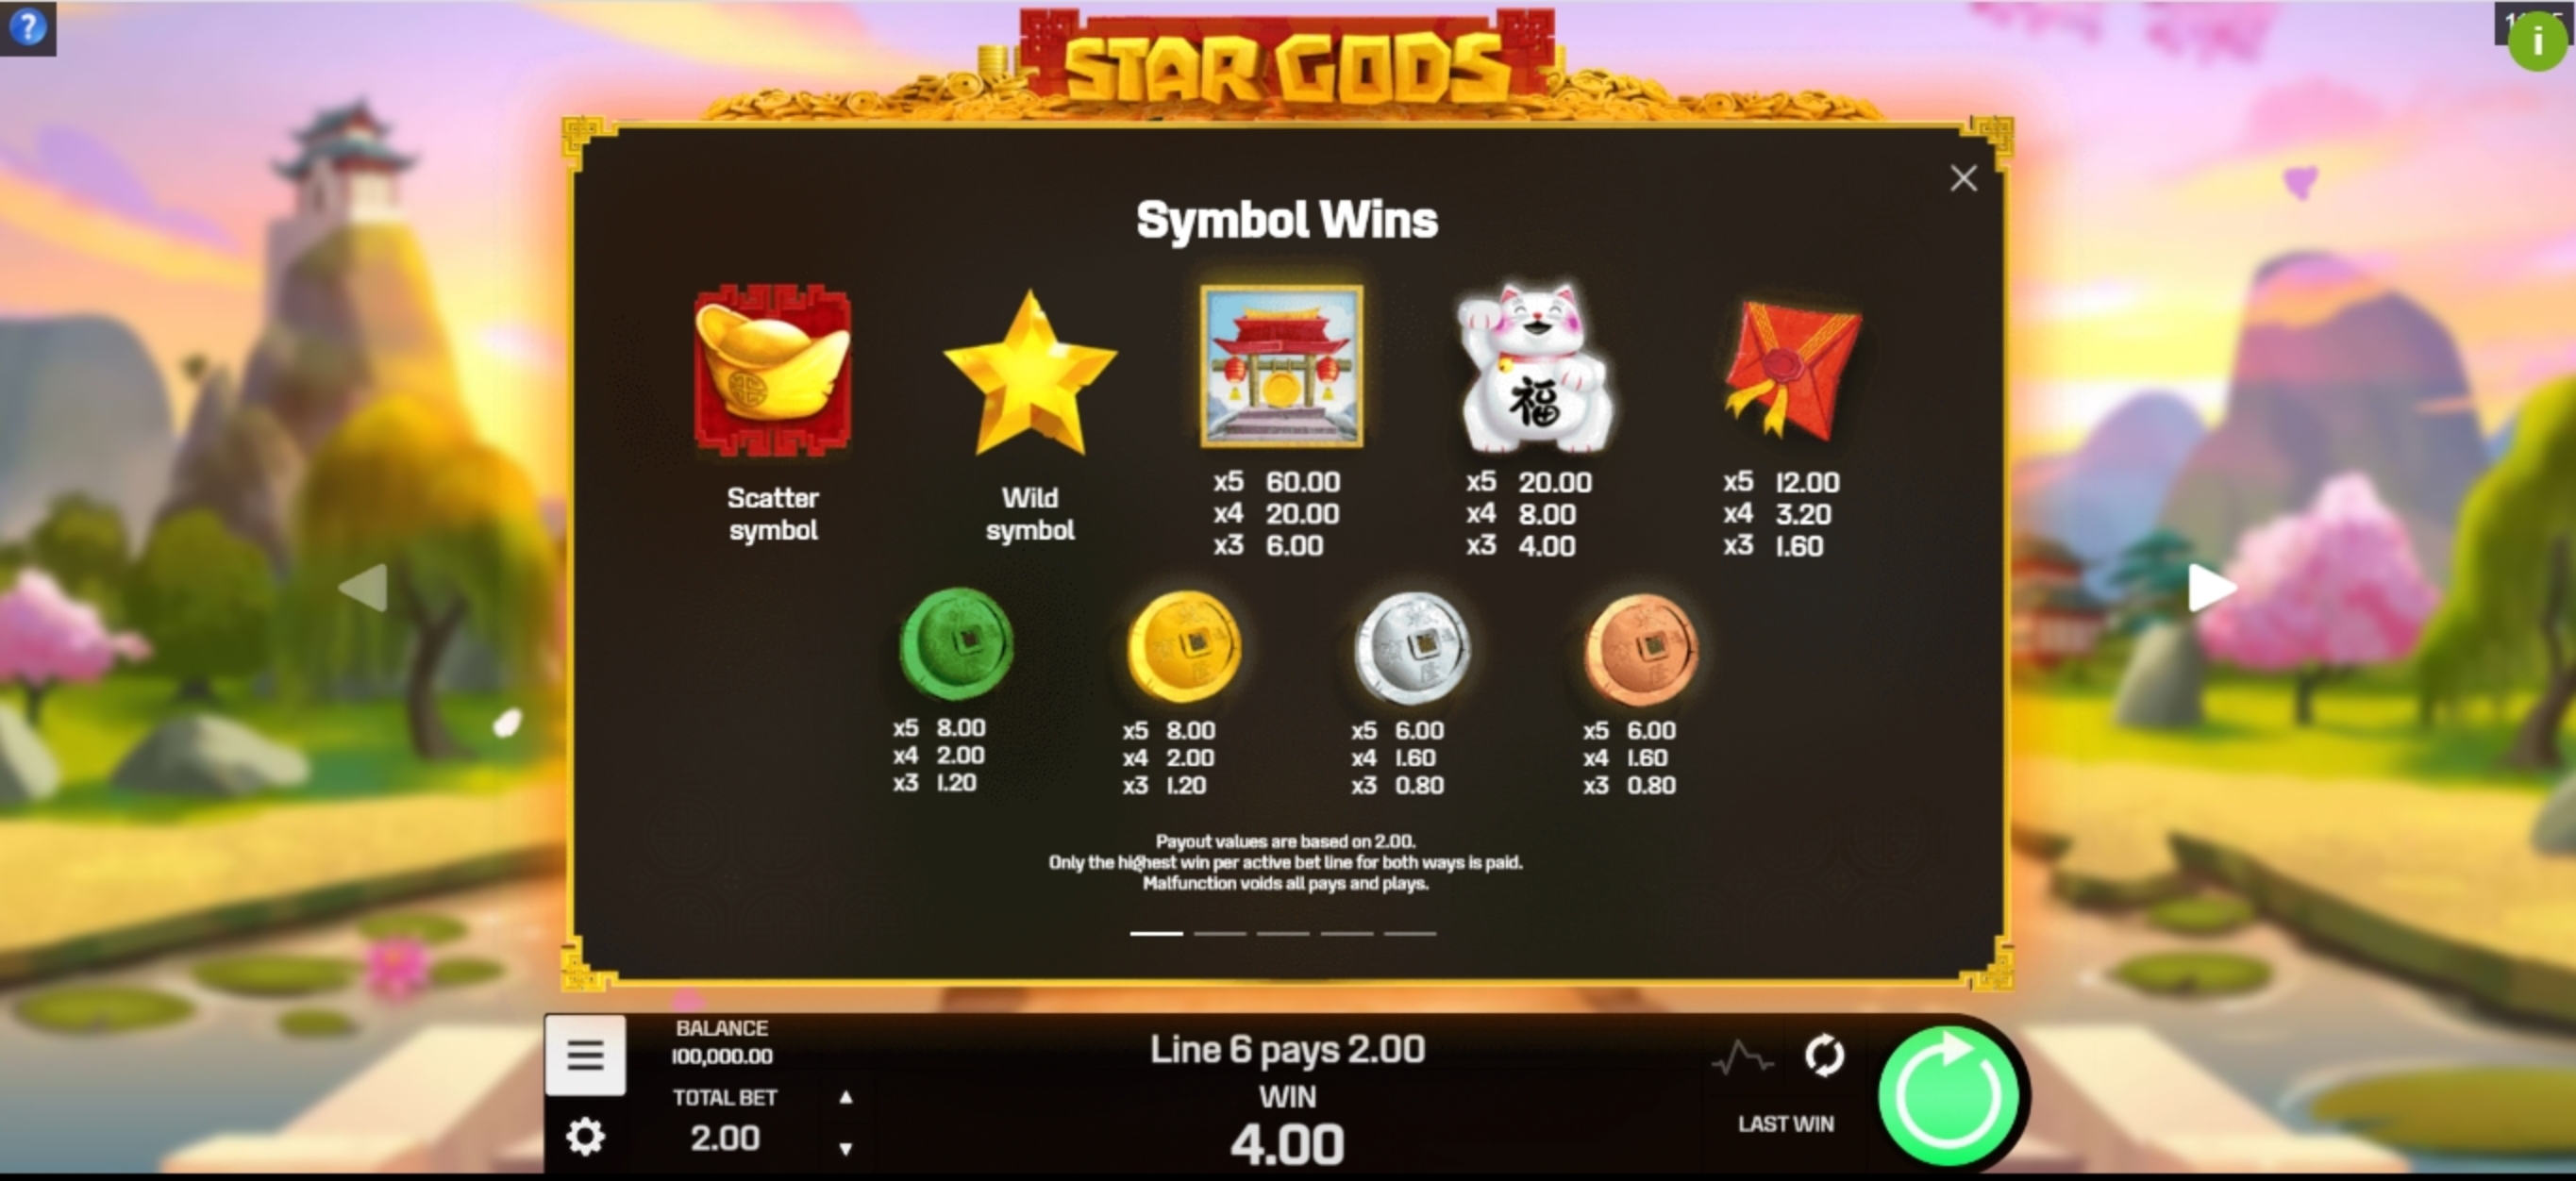 Info of Star Gods Slot Game by Golden Rock Studios